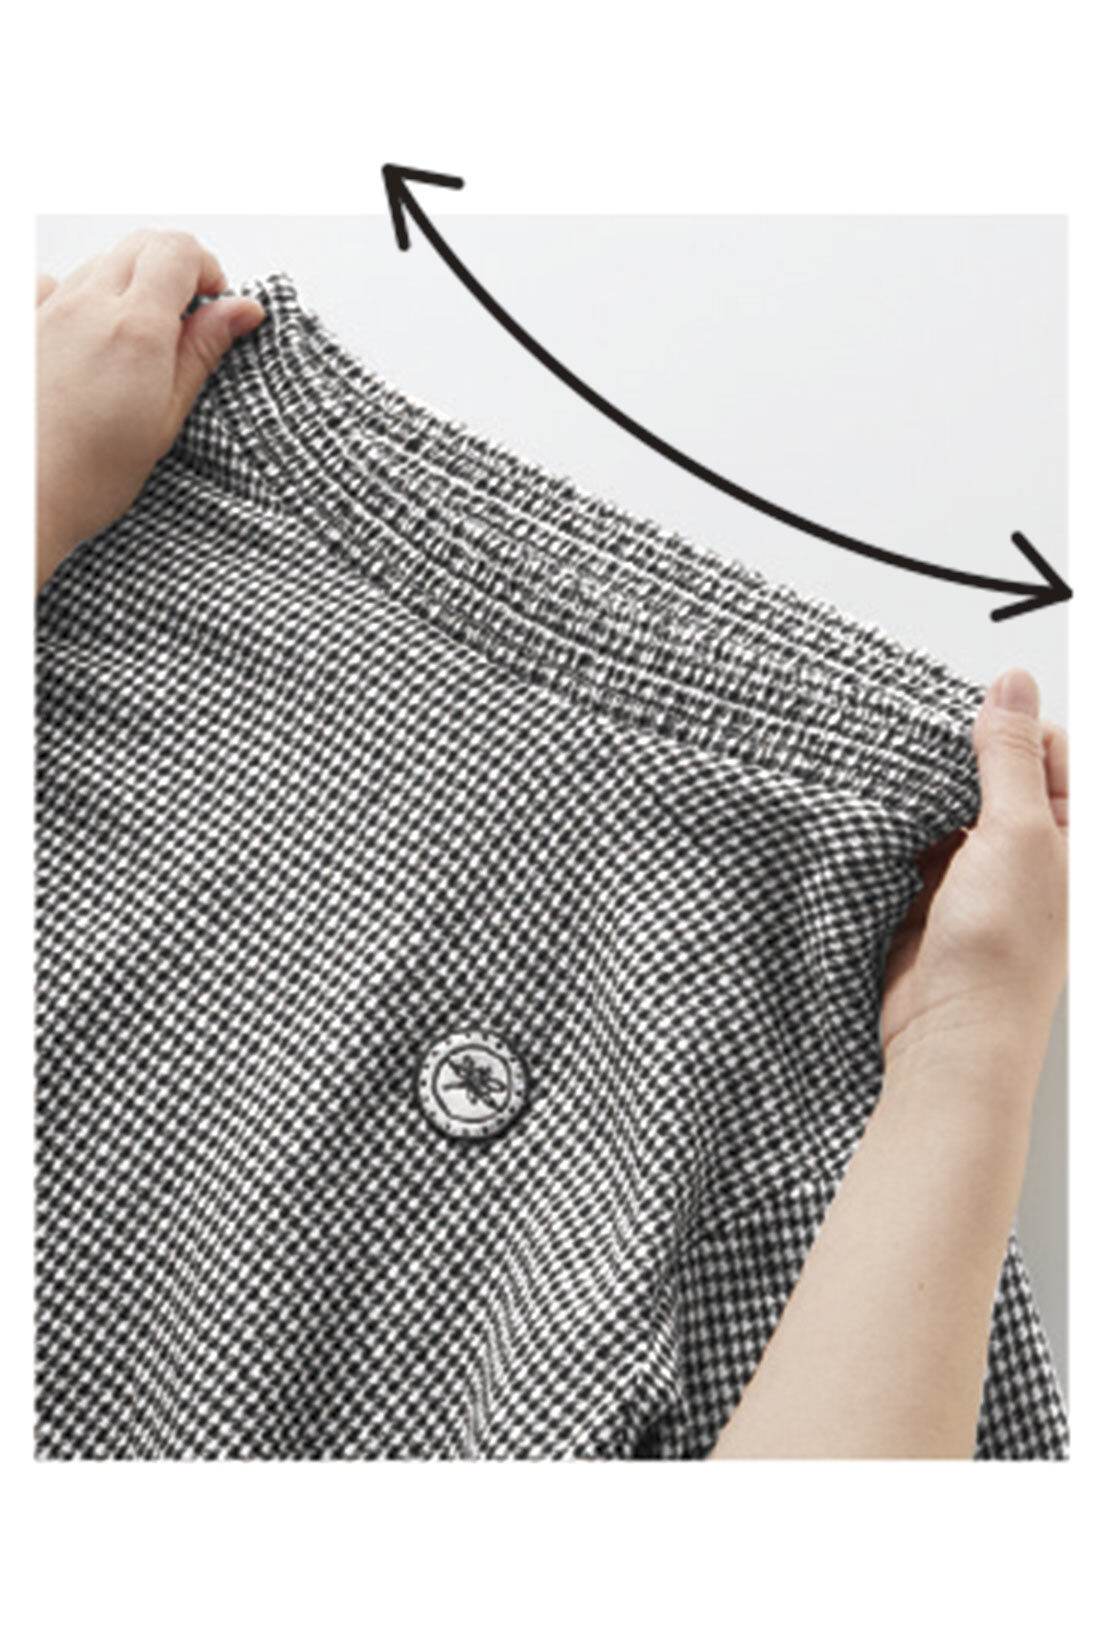 Live in  comfort|Live love cottonプロジェクト　リブ イン コンフォート　シンプルライフ研究家 マキさんとつくった ダブルガーゼのオーガニックコットンワンピース〈チドリ〉|衿もとは、シャーリングゴム遣い。Tシャツのようにかぶって着脱できます。